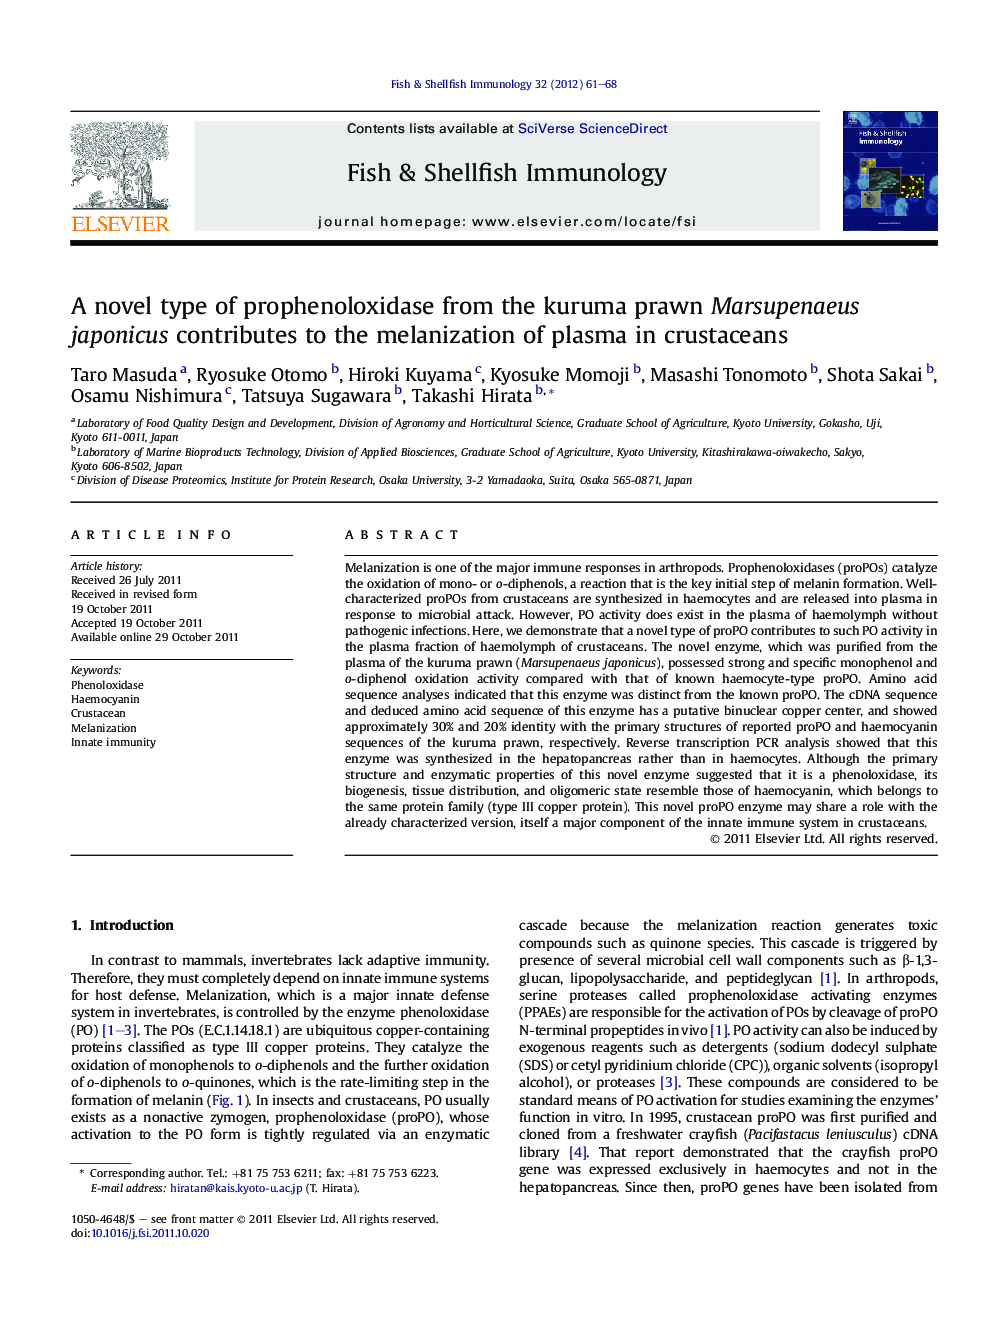 A novel type of prophenoloxidase from the kuruma prawn Marsupenaeus japonicus contributes to the melanization of plasma in crustaceans